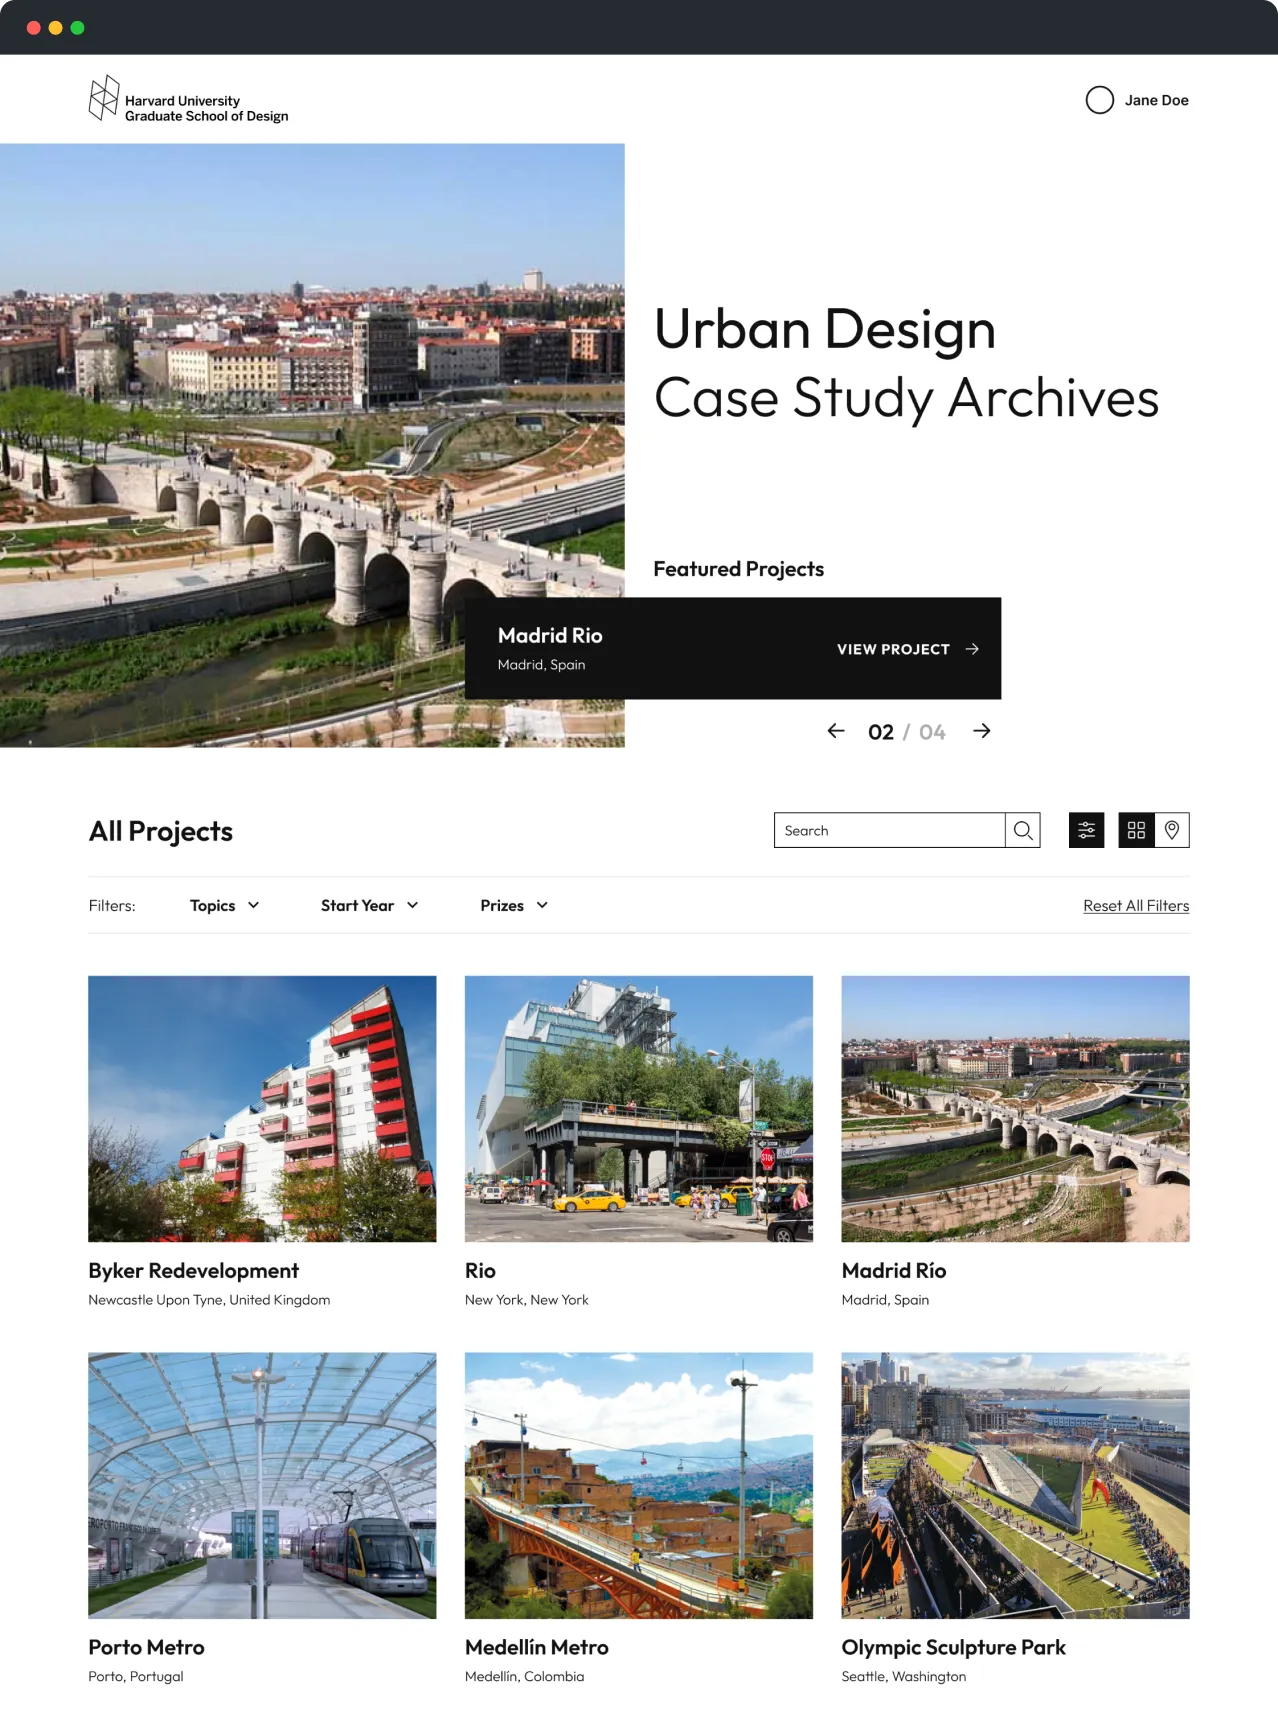 Urban Design Case Study Archive example image